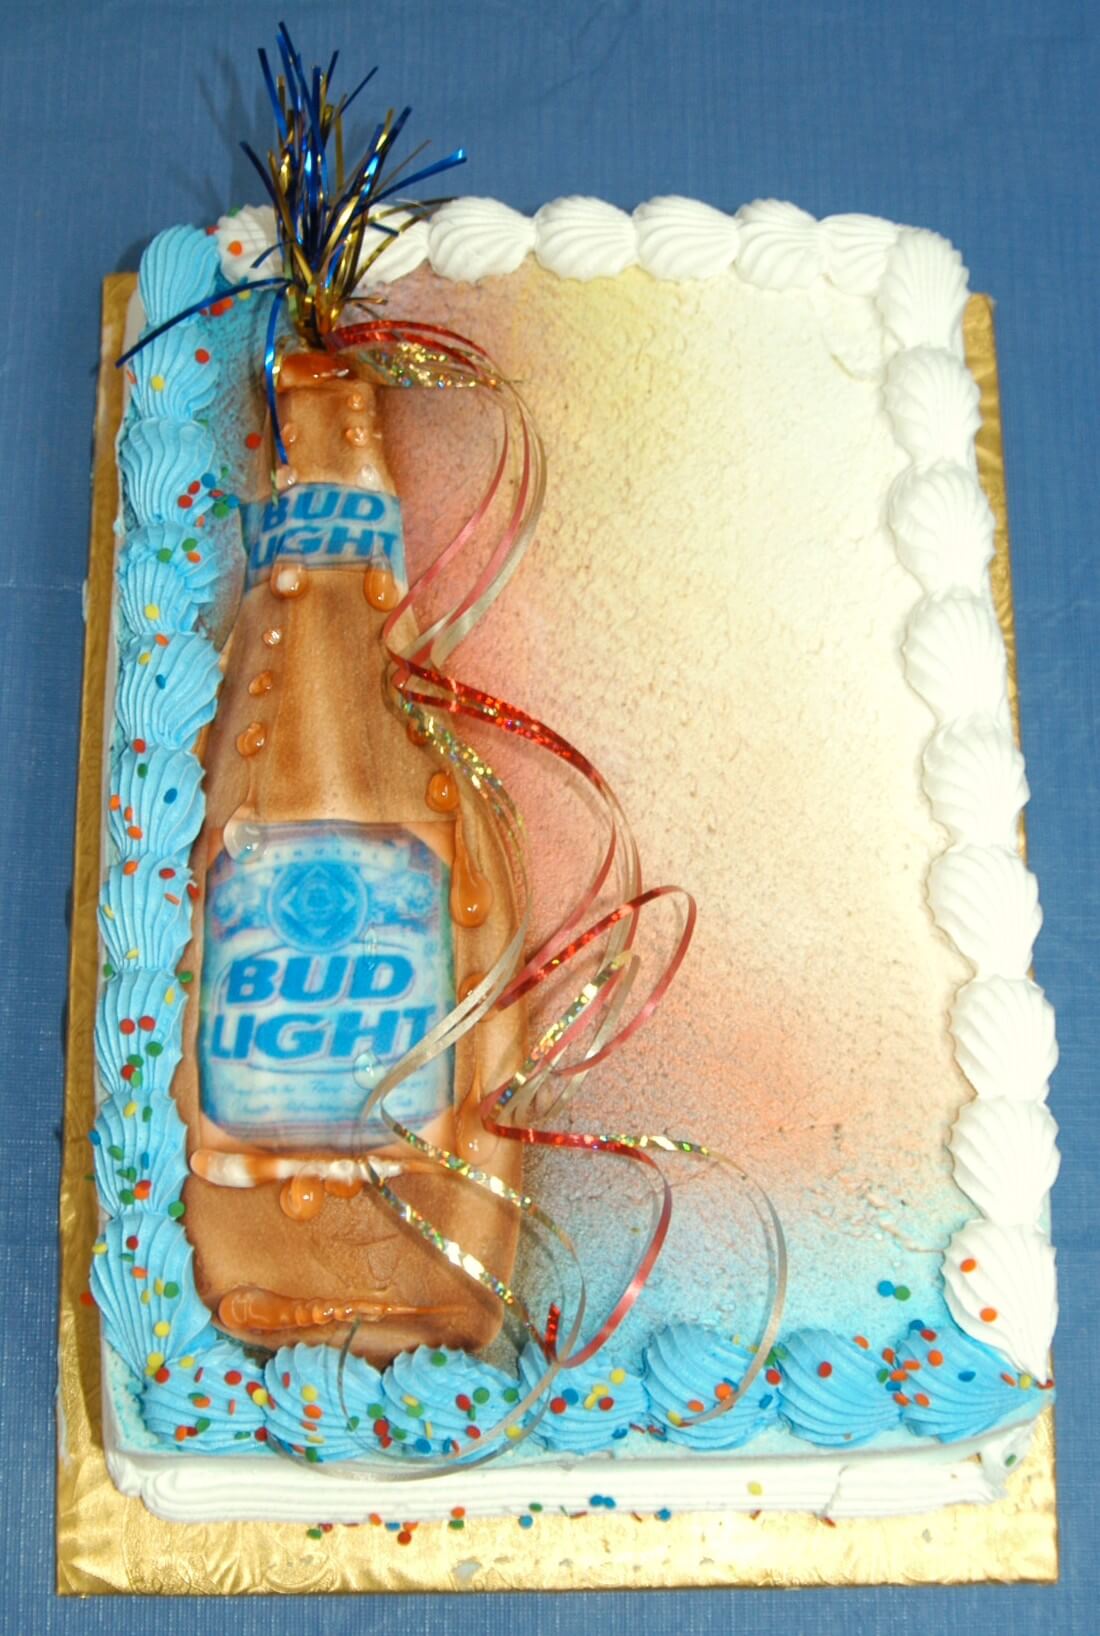 McArthur's Bakery Custom Cake with a Bud Light Bottle 